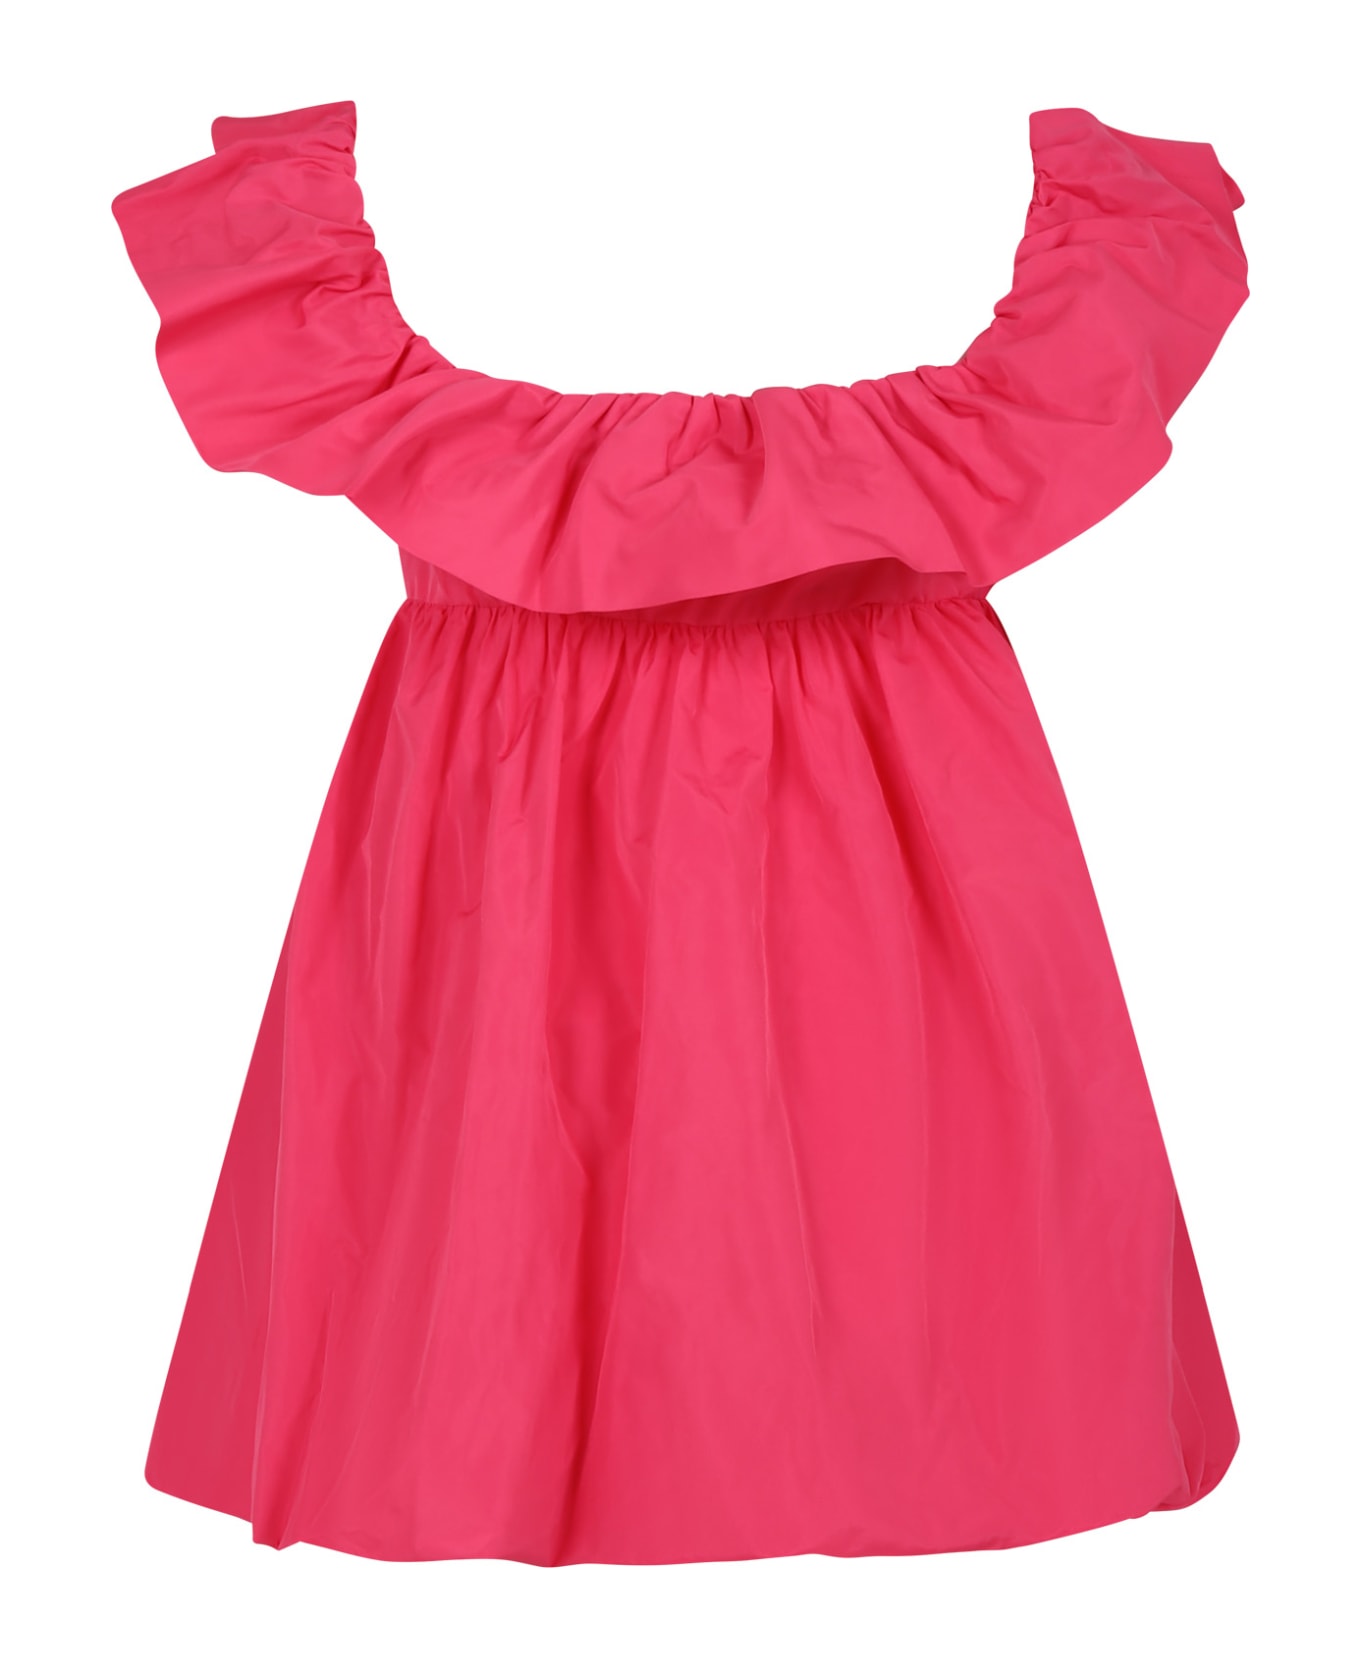 MSGM Fuchsia Dress For Girl With Ruffles - Fuchsia